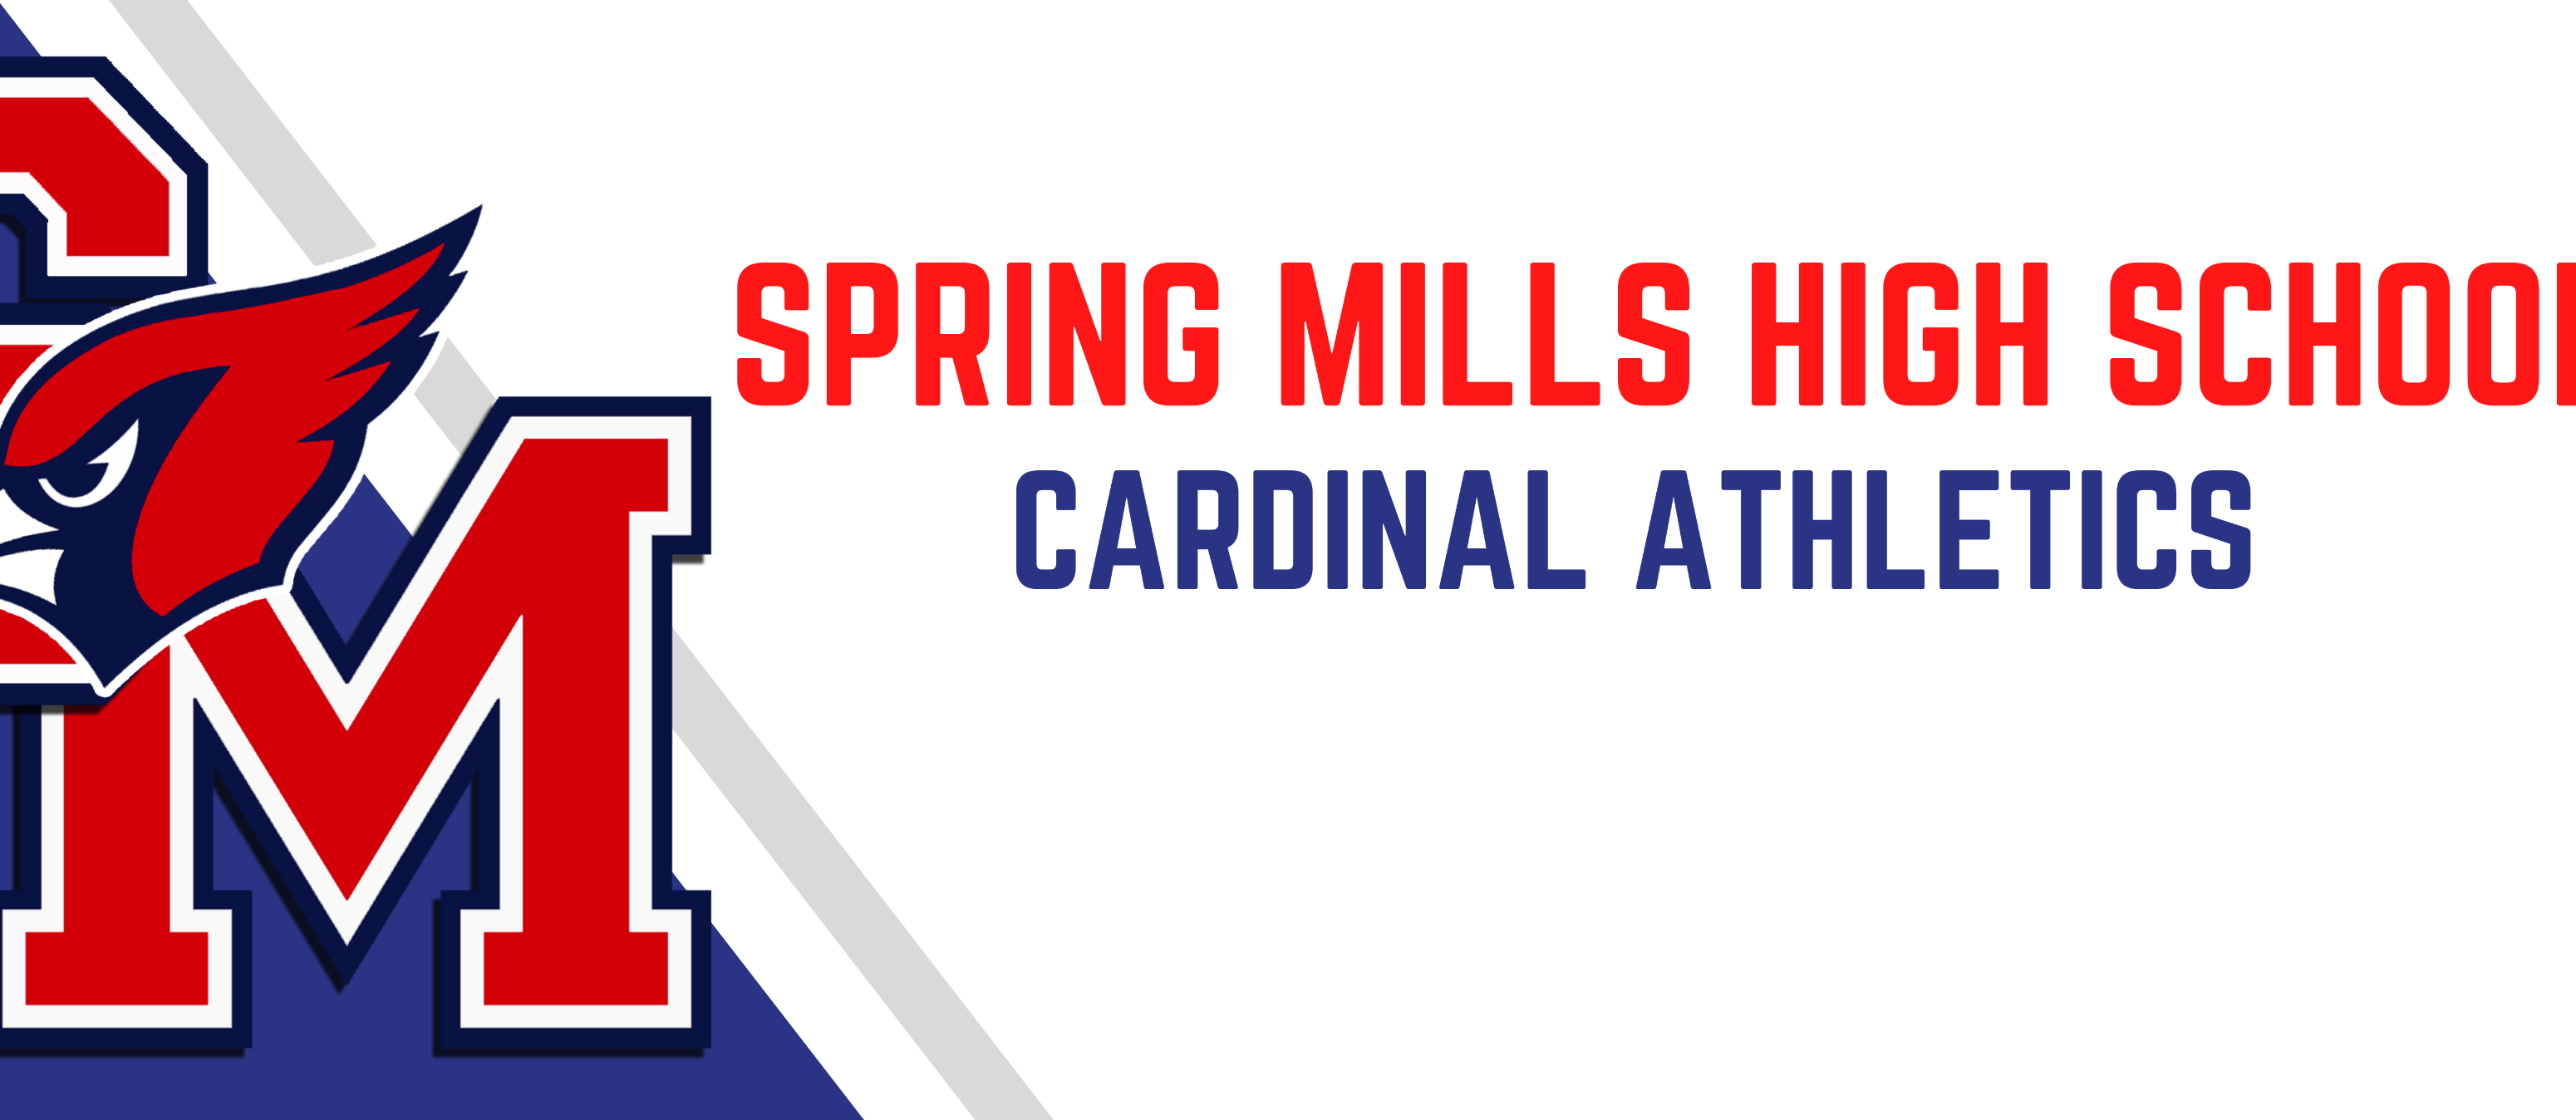 Spring mills high school cardinal athletics